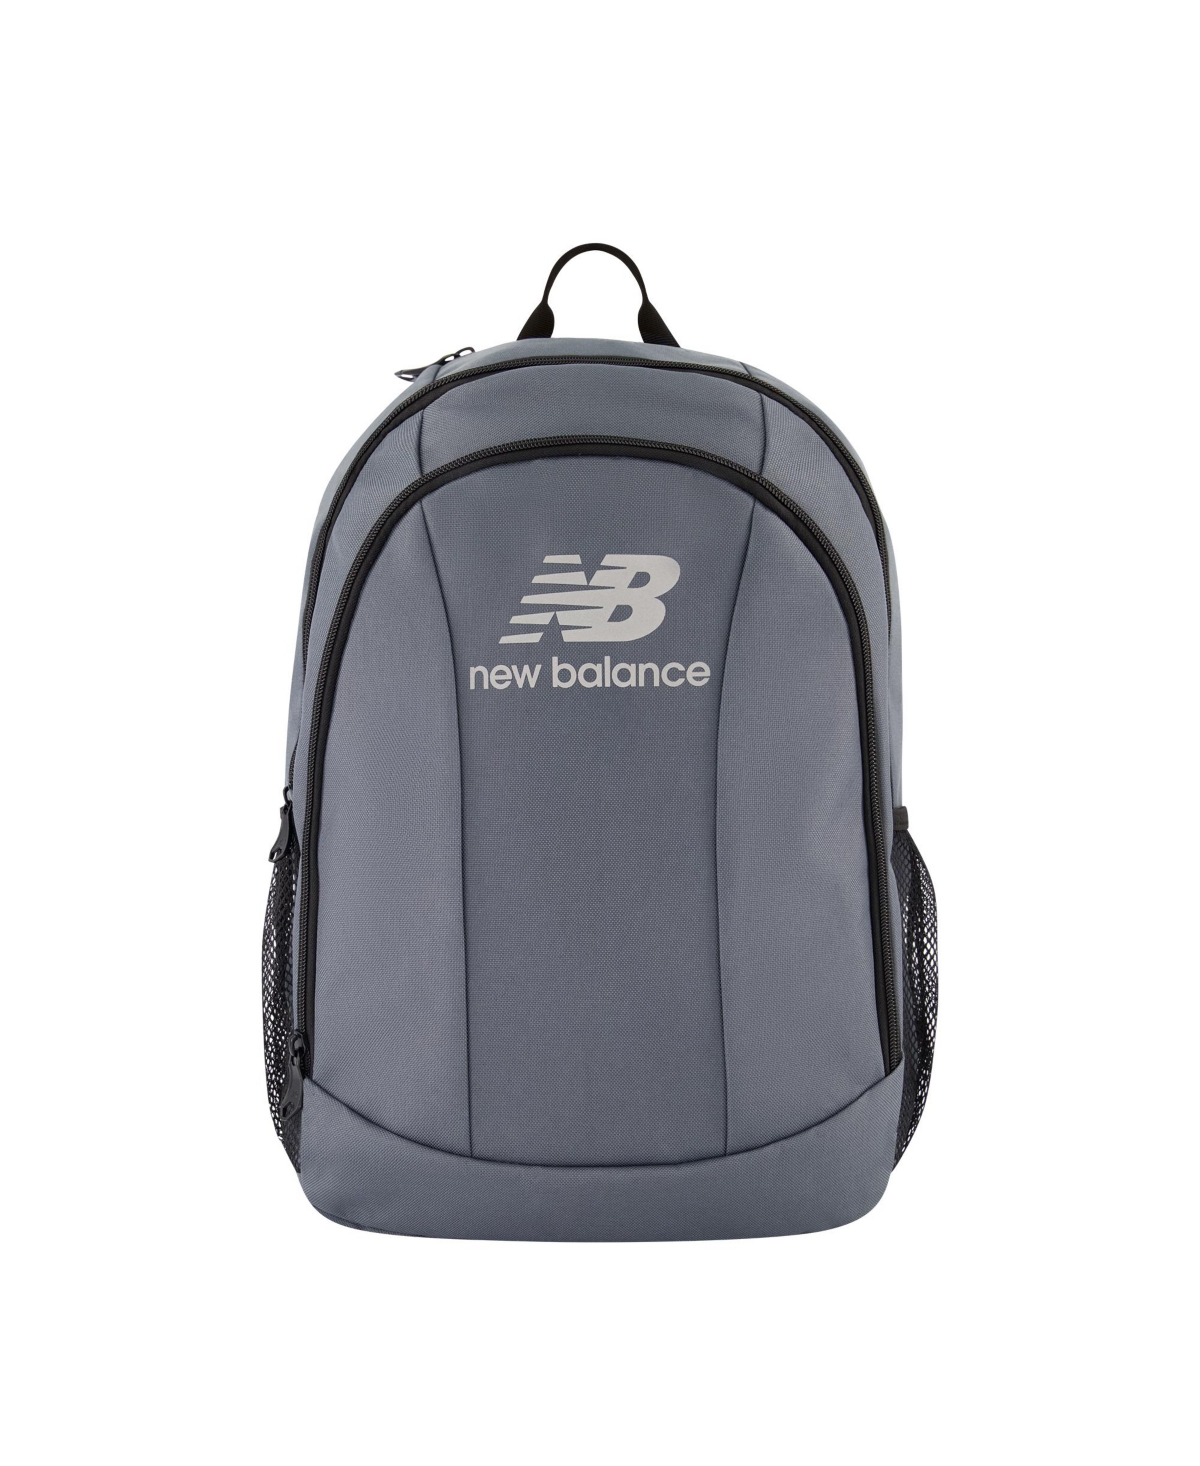 19" Laptop Backpack - Tan